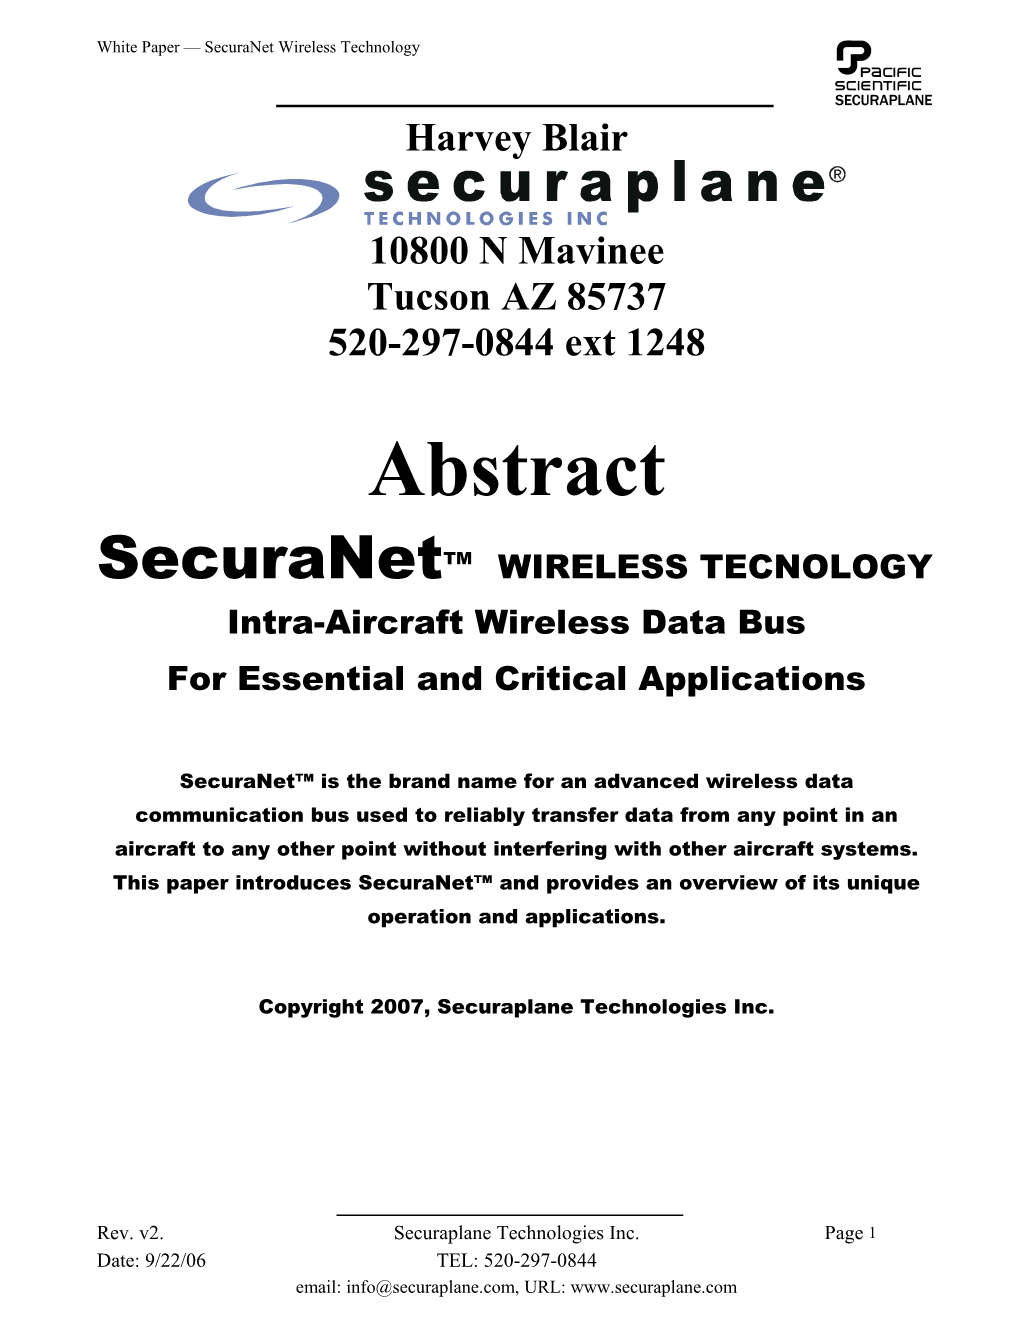 Intra-Aircraft Wireless Data Bus